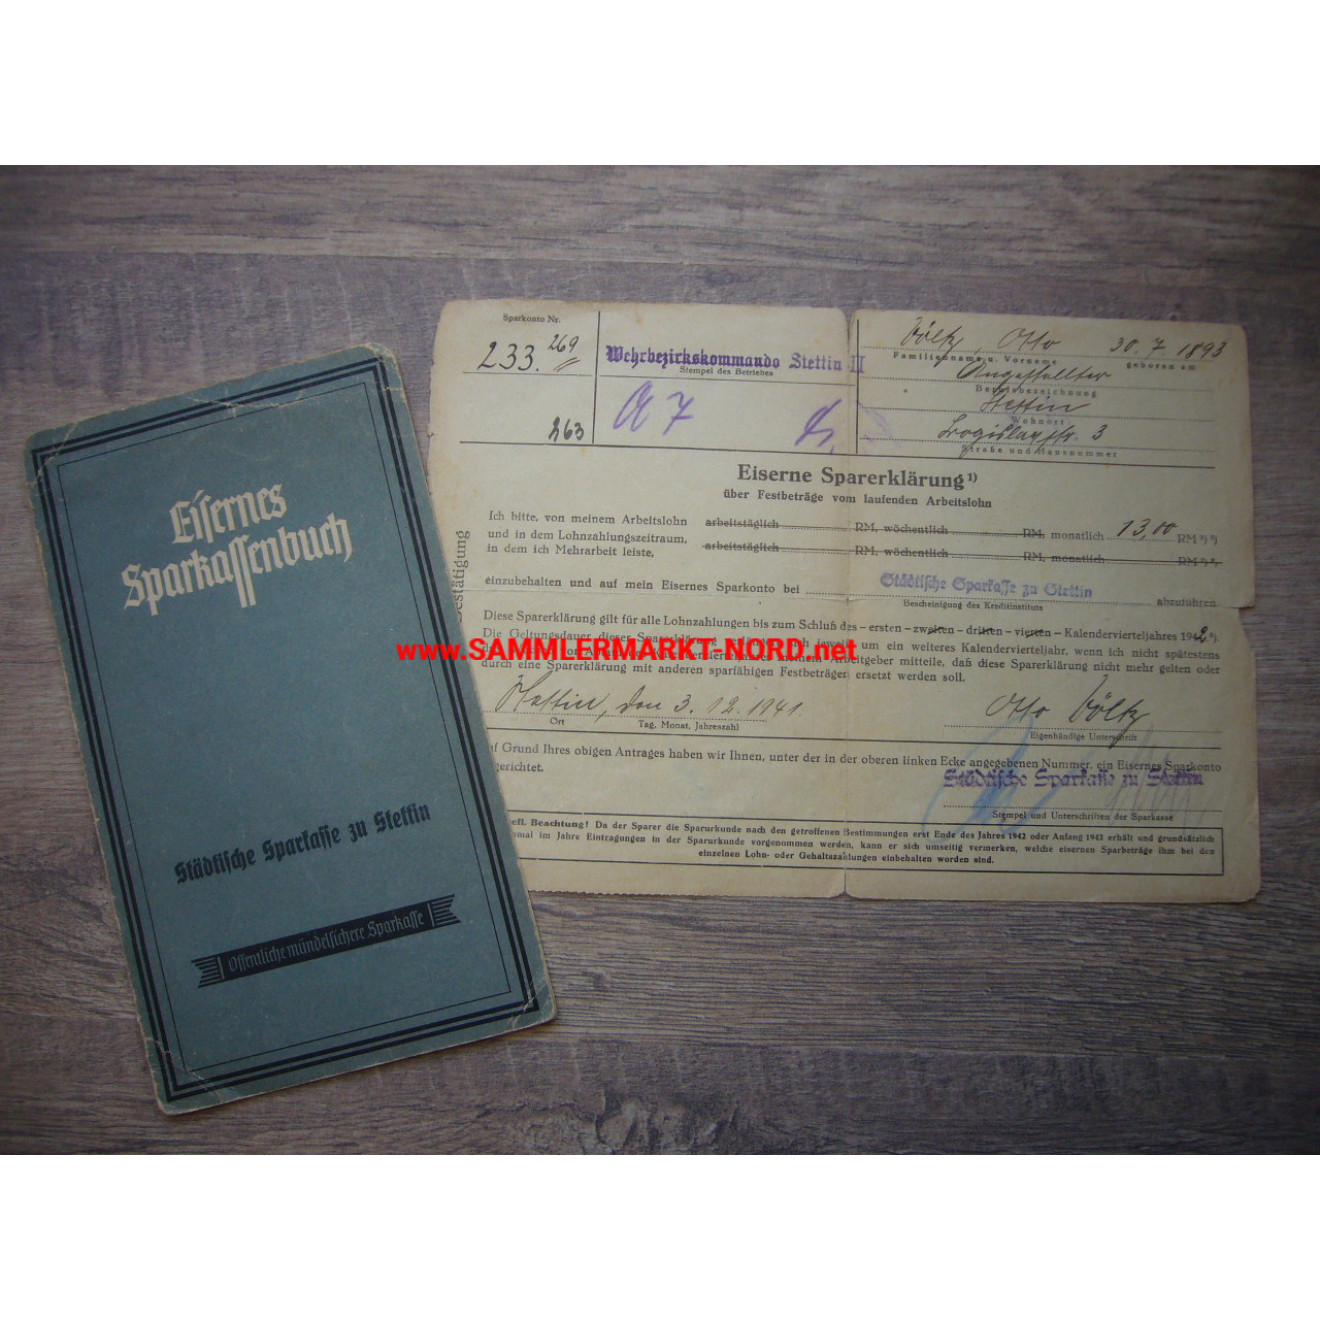 Iron savings bank book - Szczecin (Pomerania) 1943/44